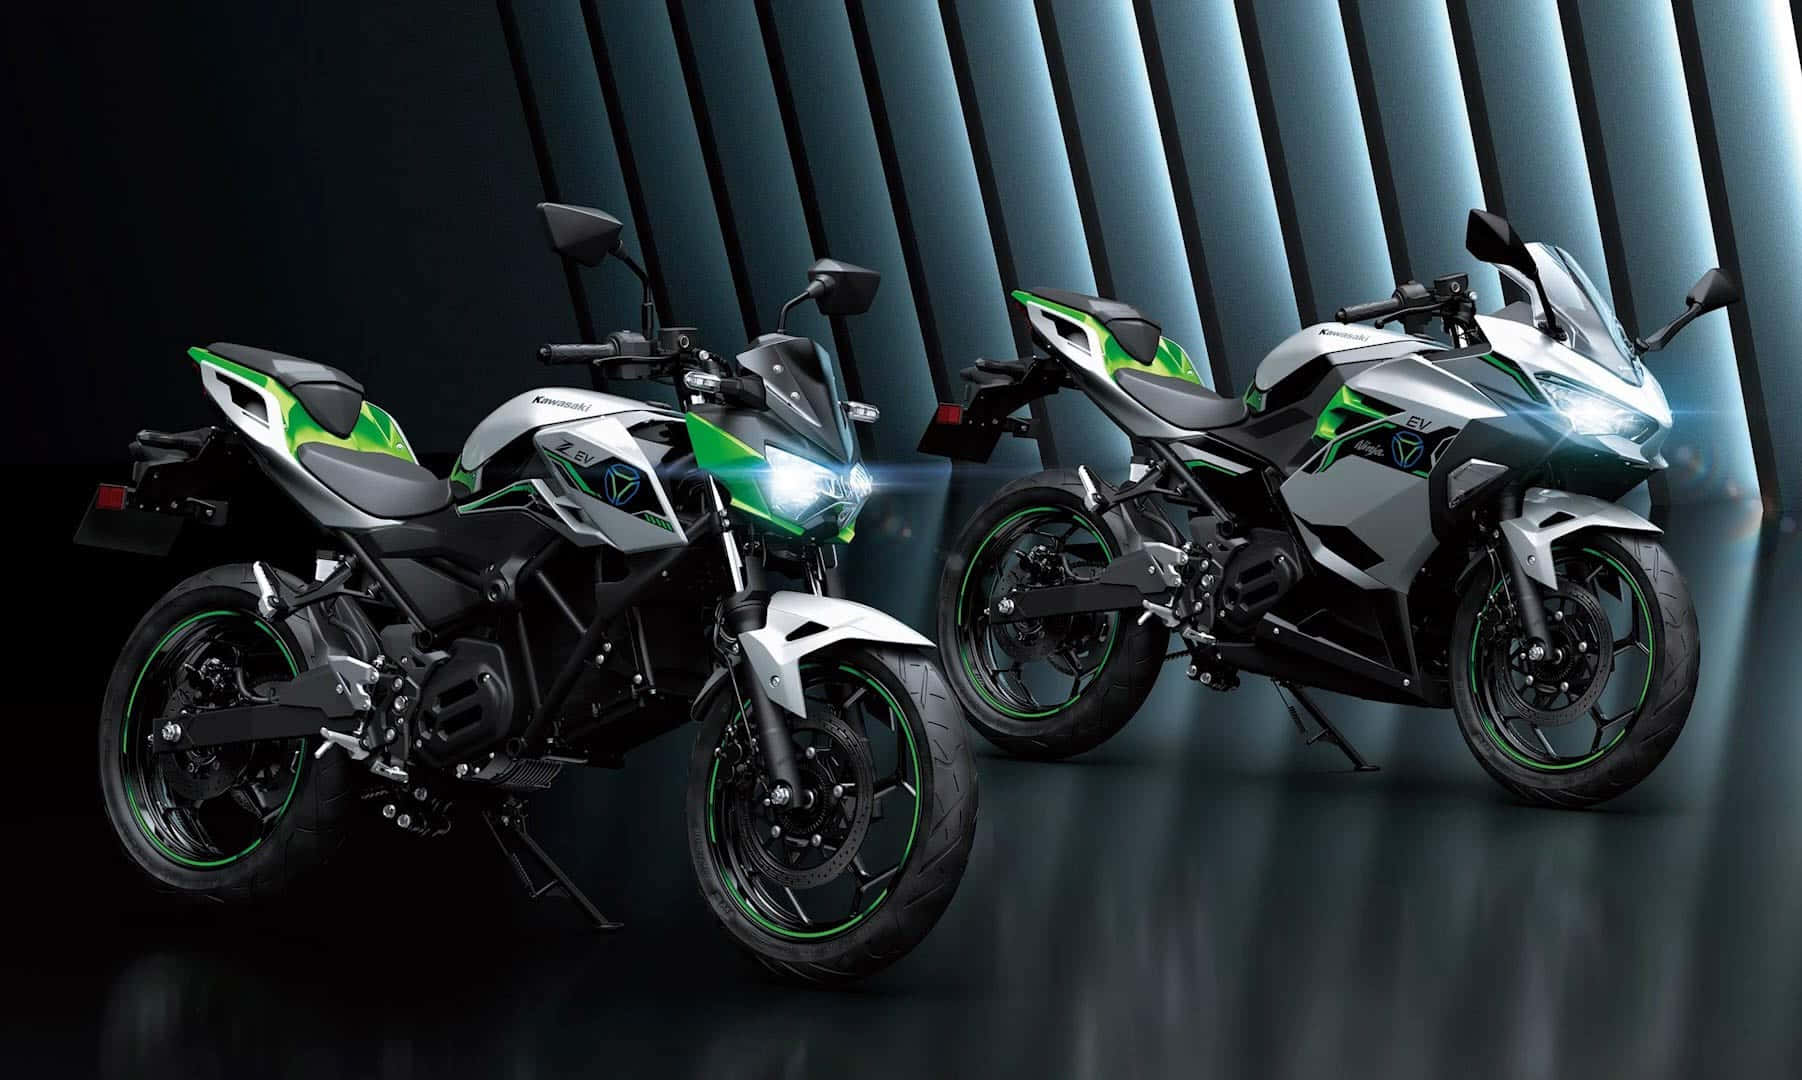 Stunning Kawasaki Motorcycle In Action Wallpaper